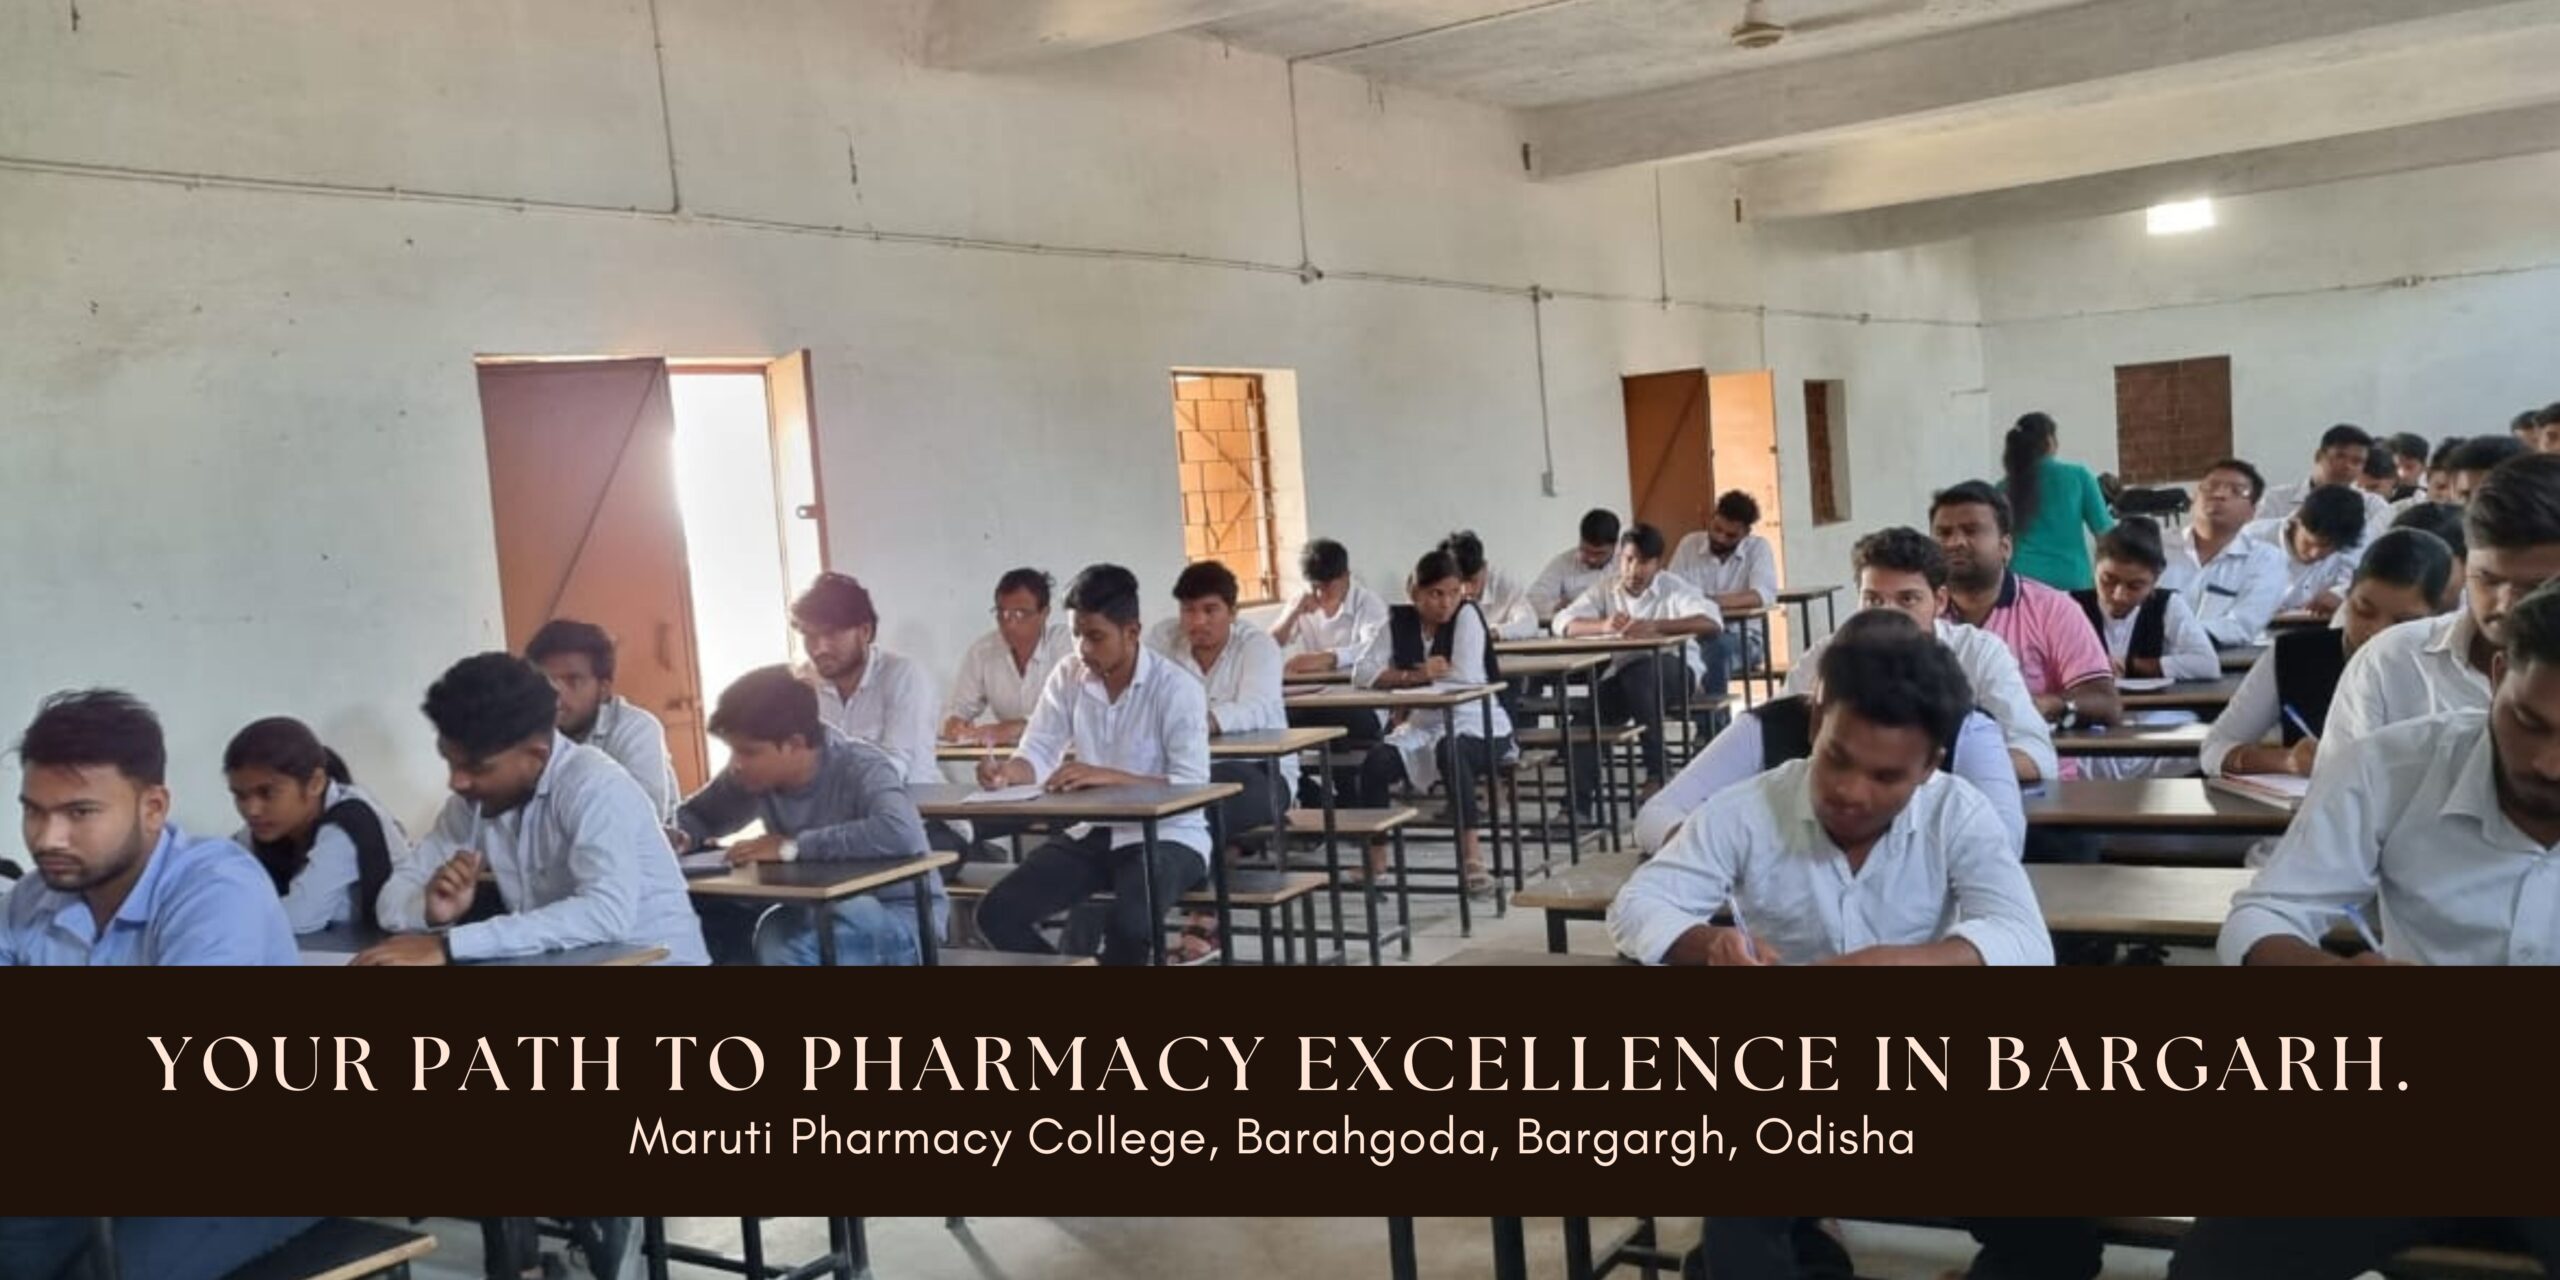 maruti-pharmacy-college-bargarh-image-02